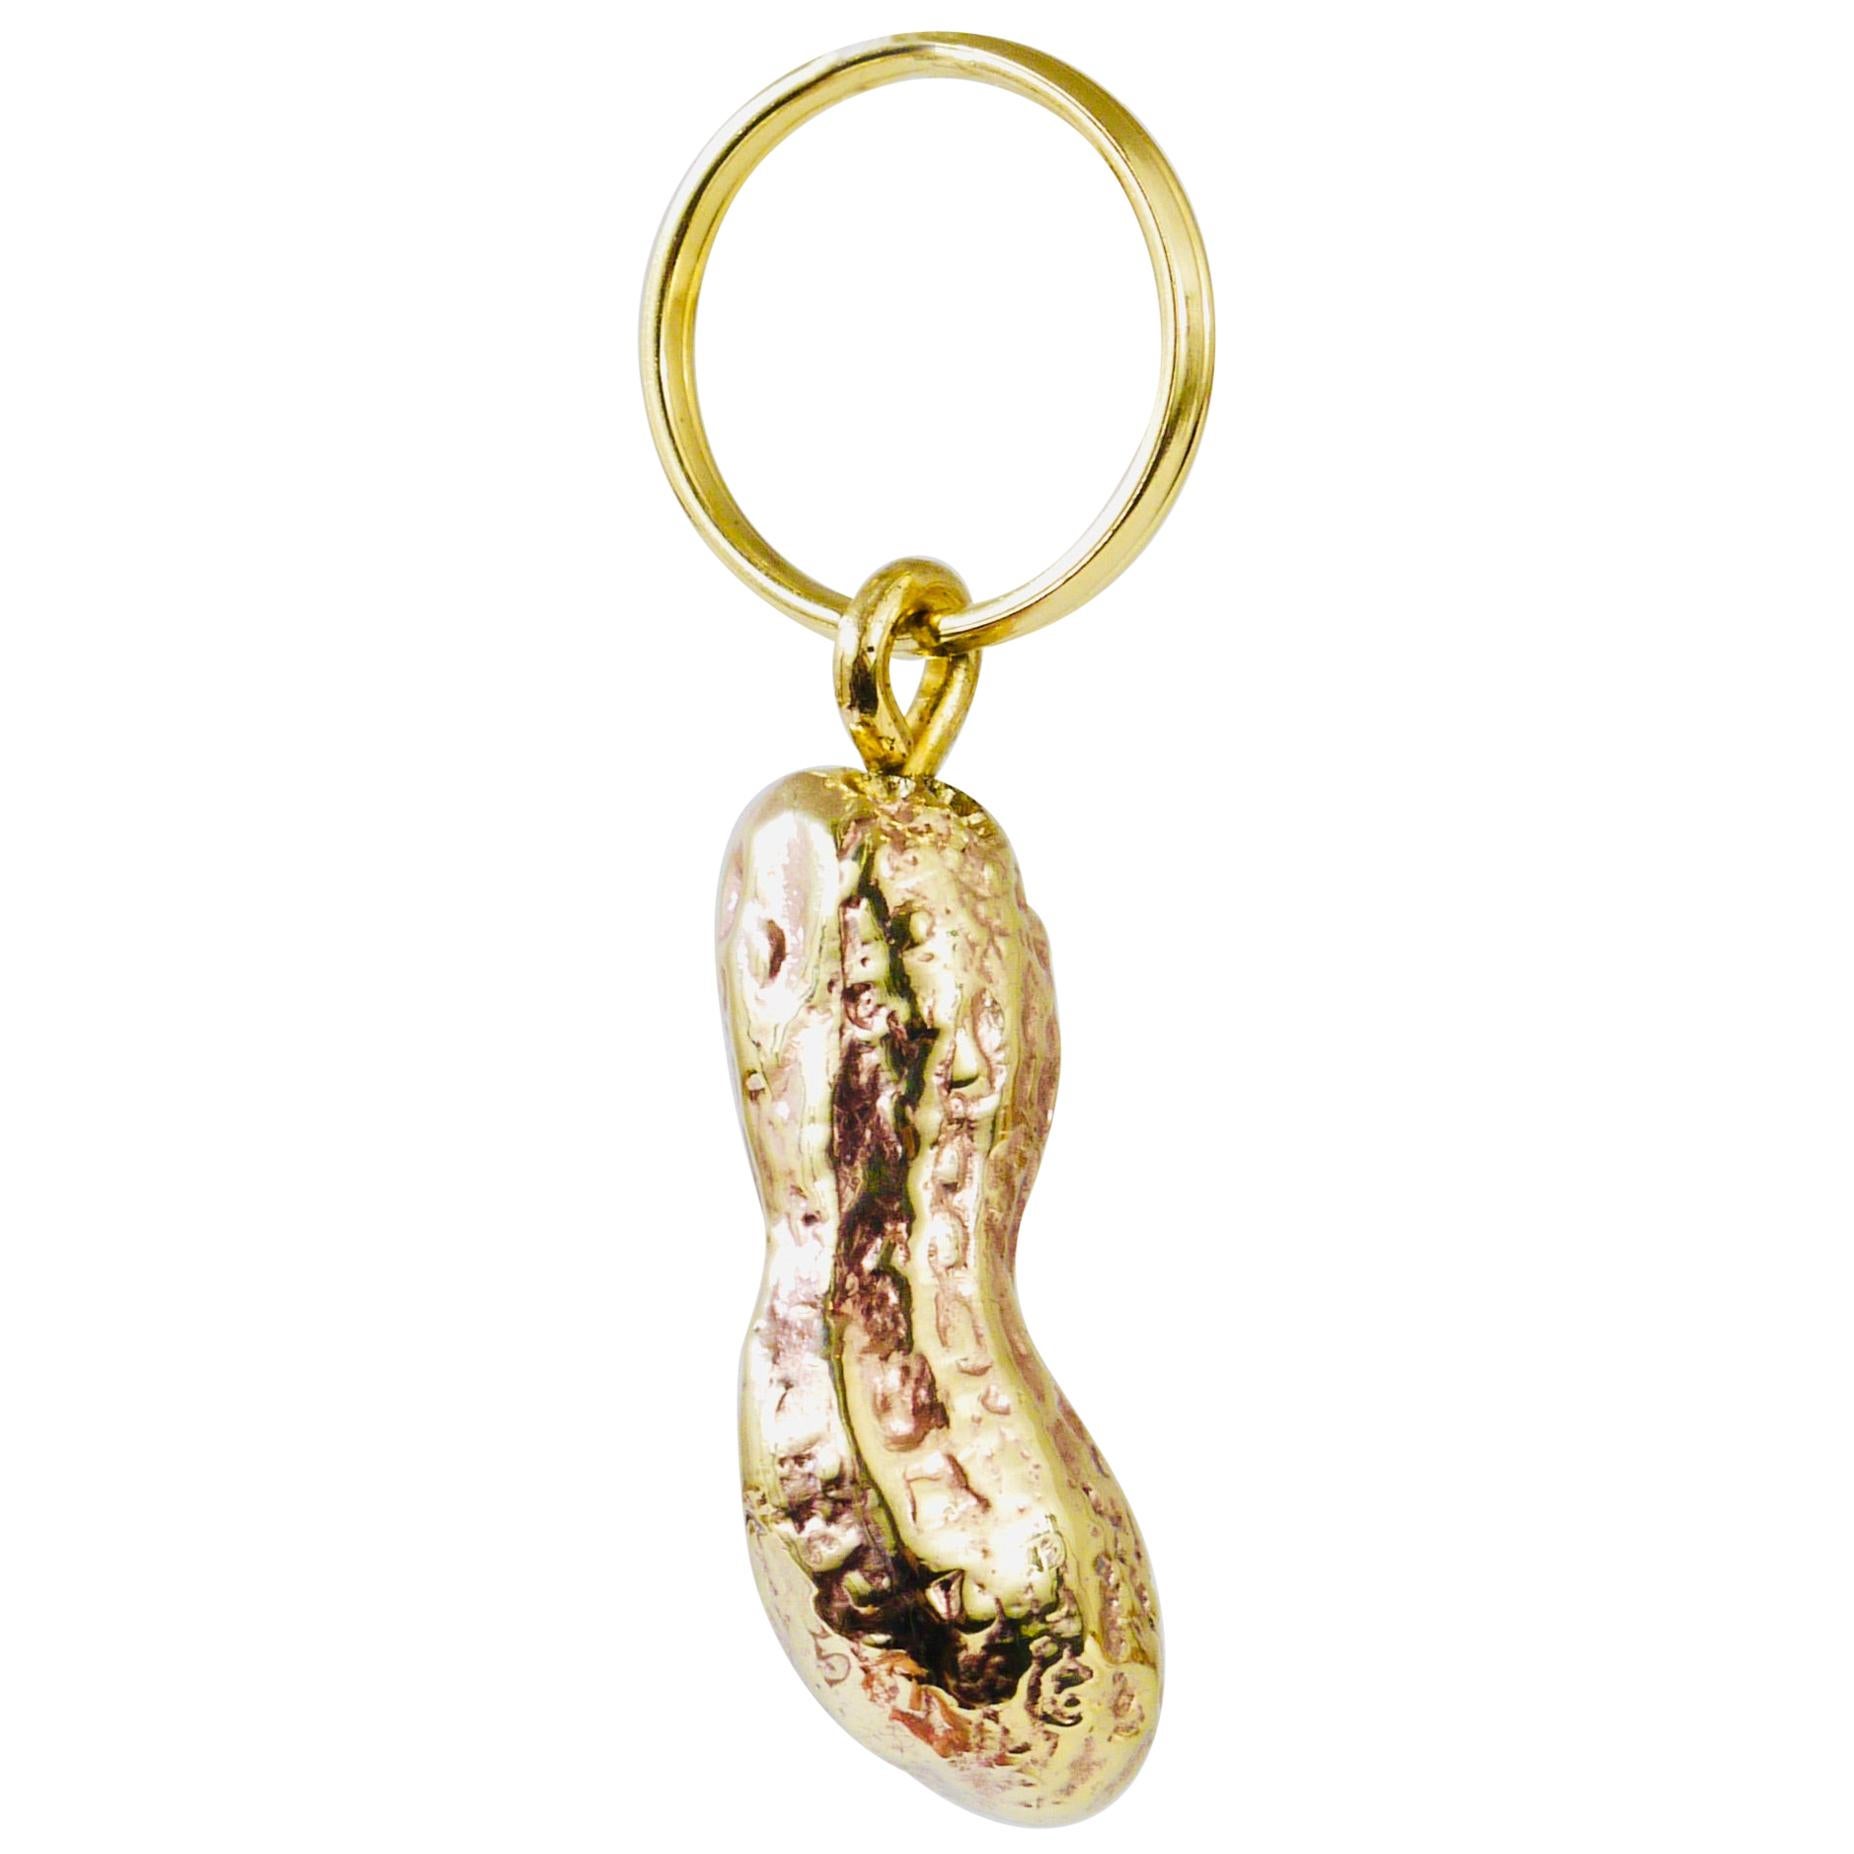 Carl Auböck Handcrafted Midcentury Peanut Brass Figurine Key Ring Chain Holder